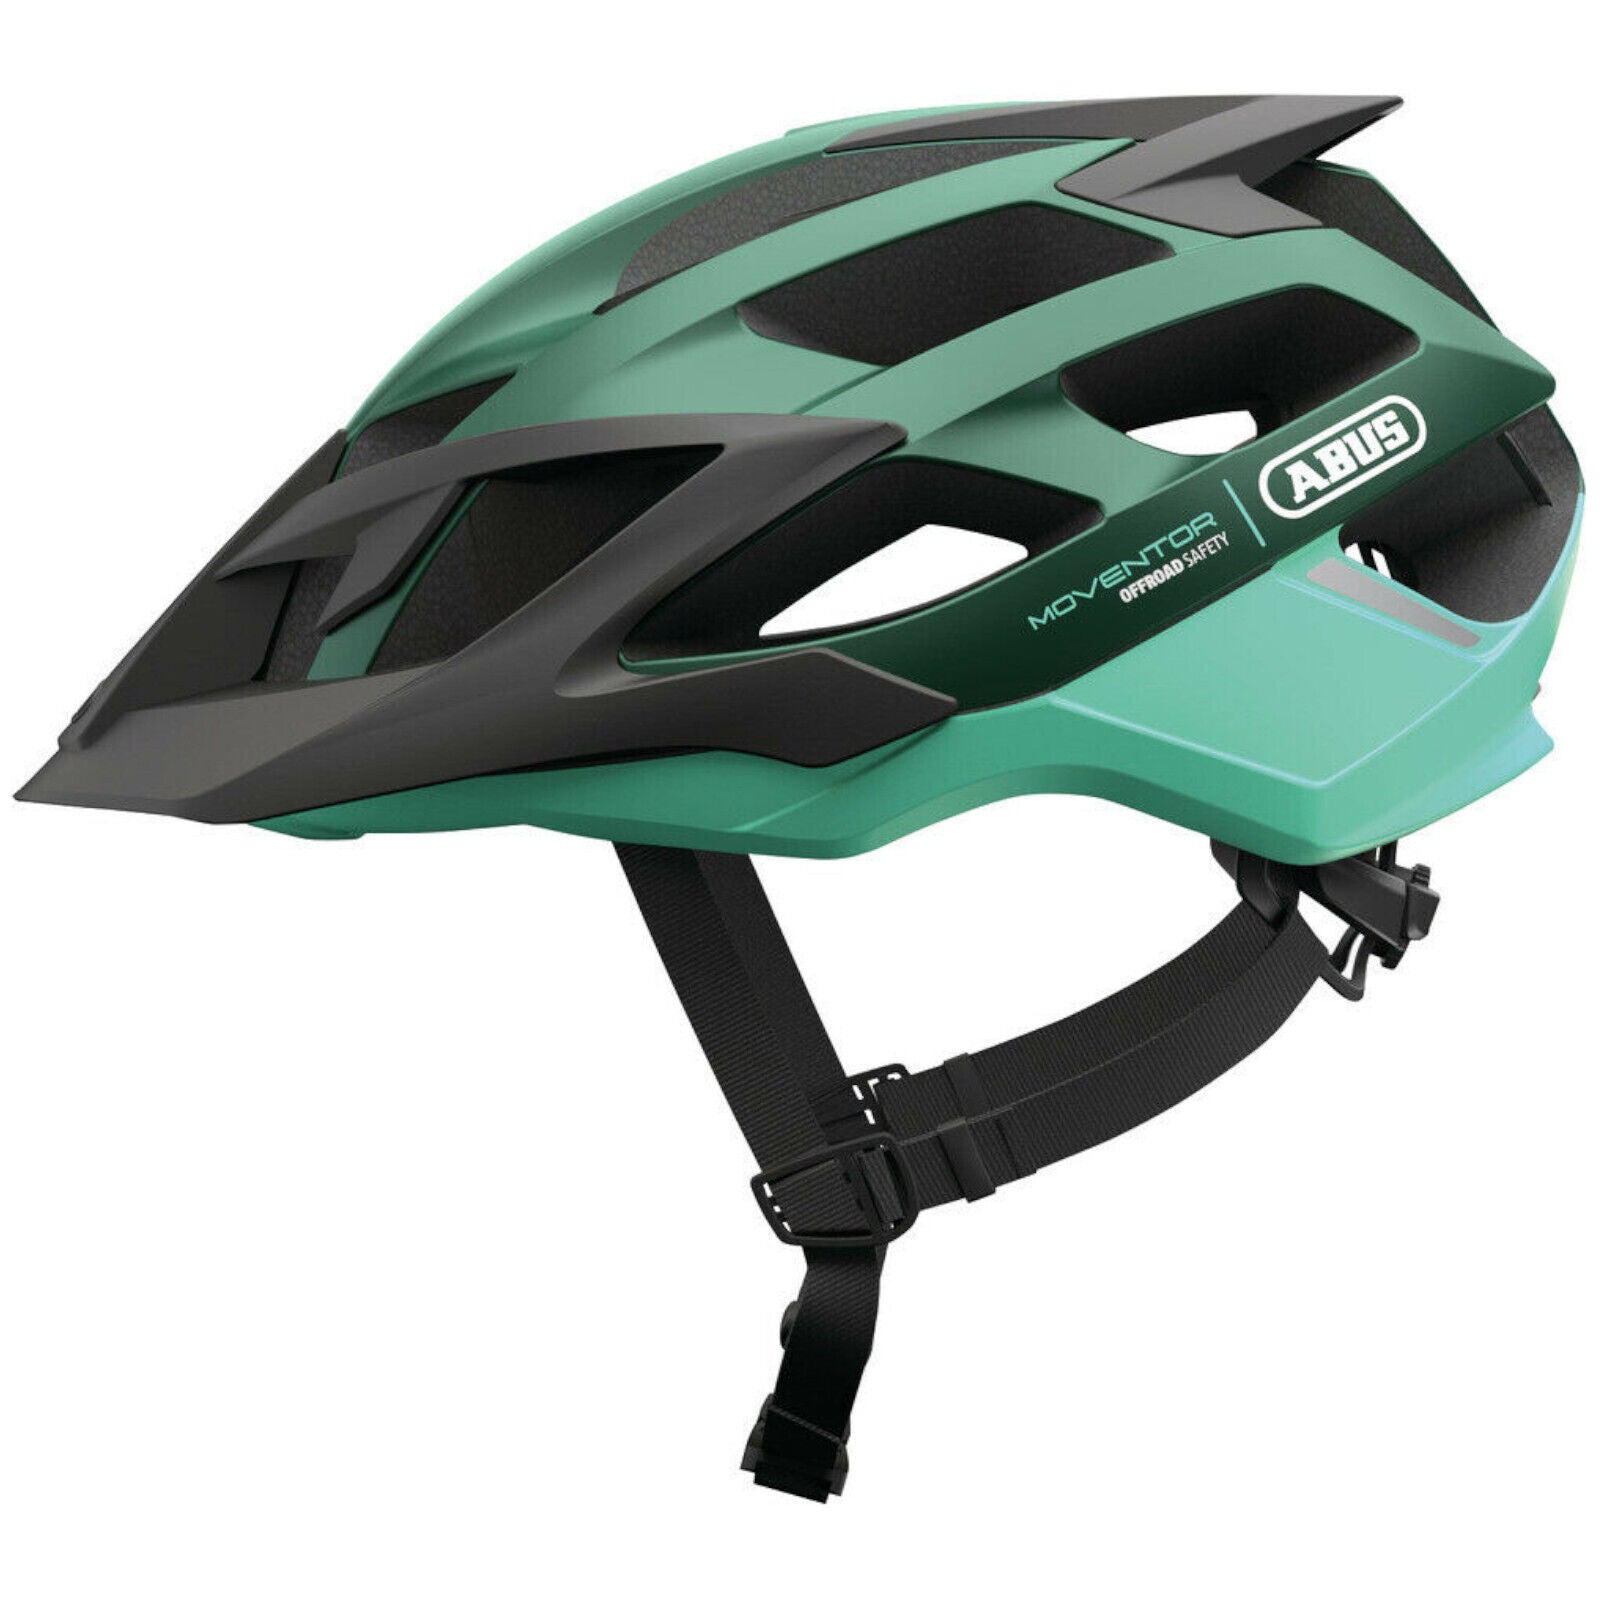 Abus Moventor MBT Mountain Bike Cycling Helmet